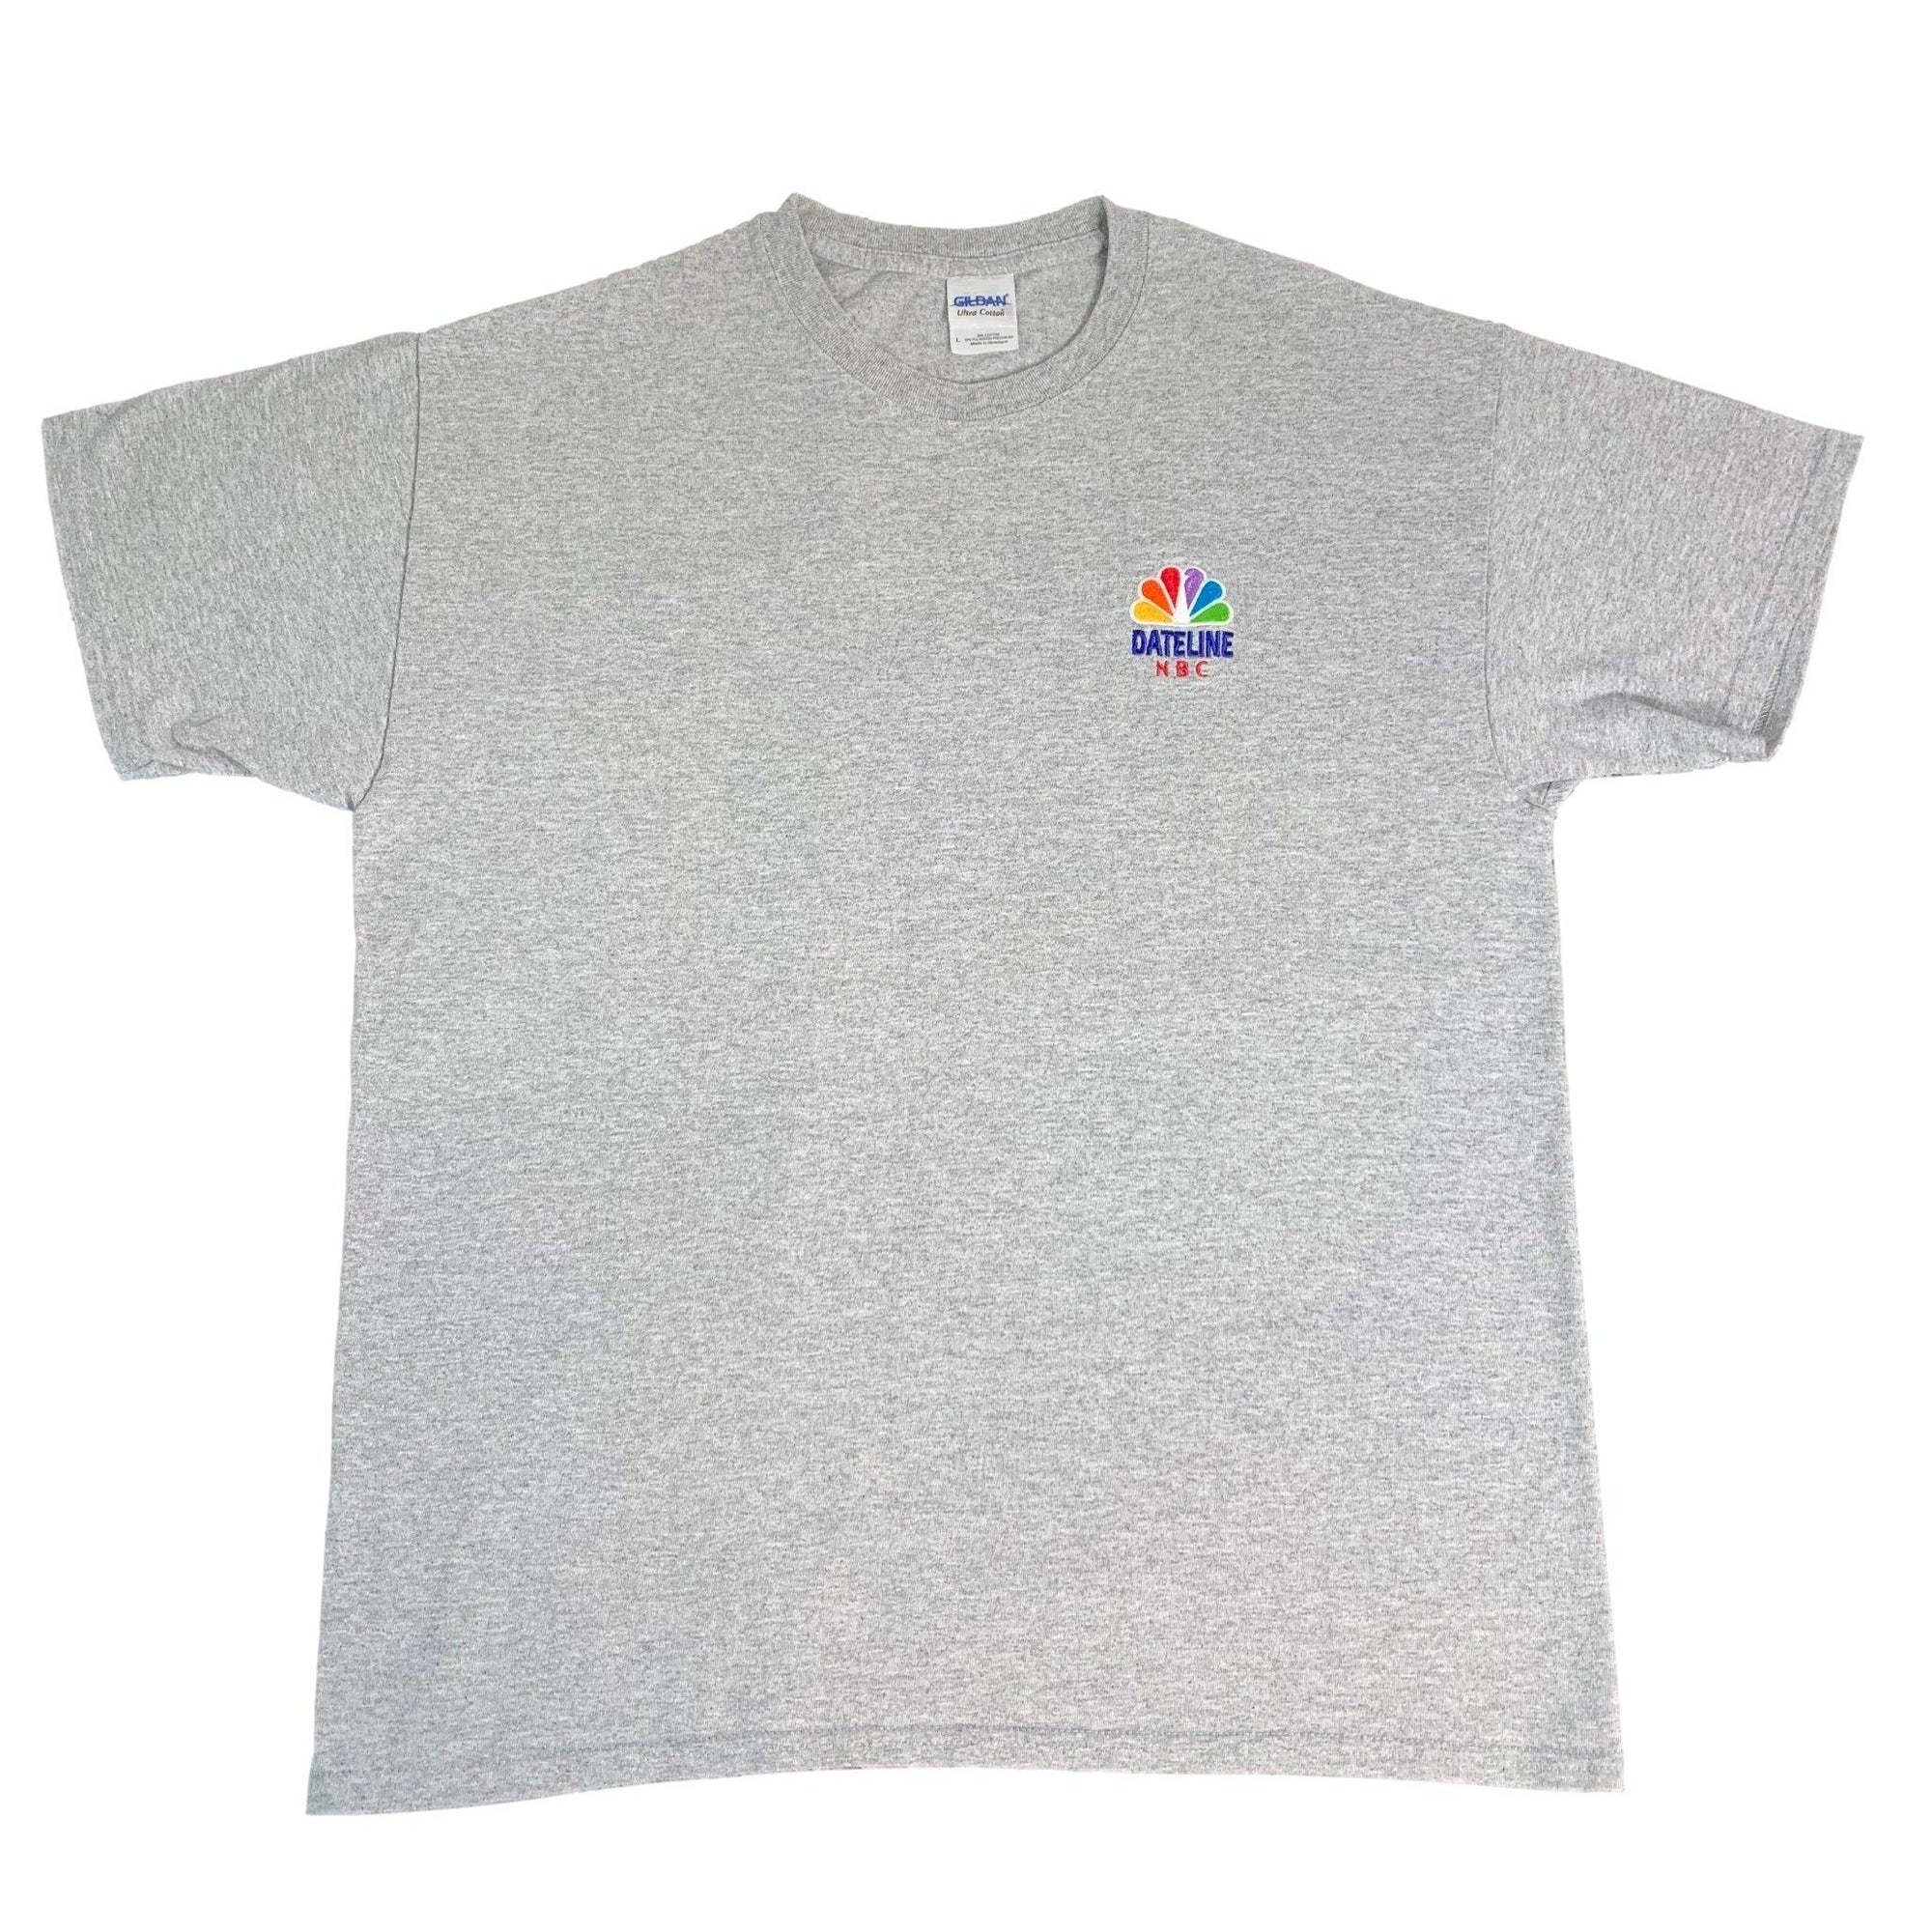 Vintage Dateline "NBC" Embroidered T-Shirt - jointcustodydc